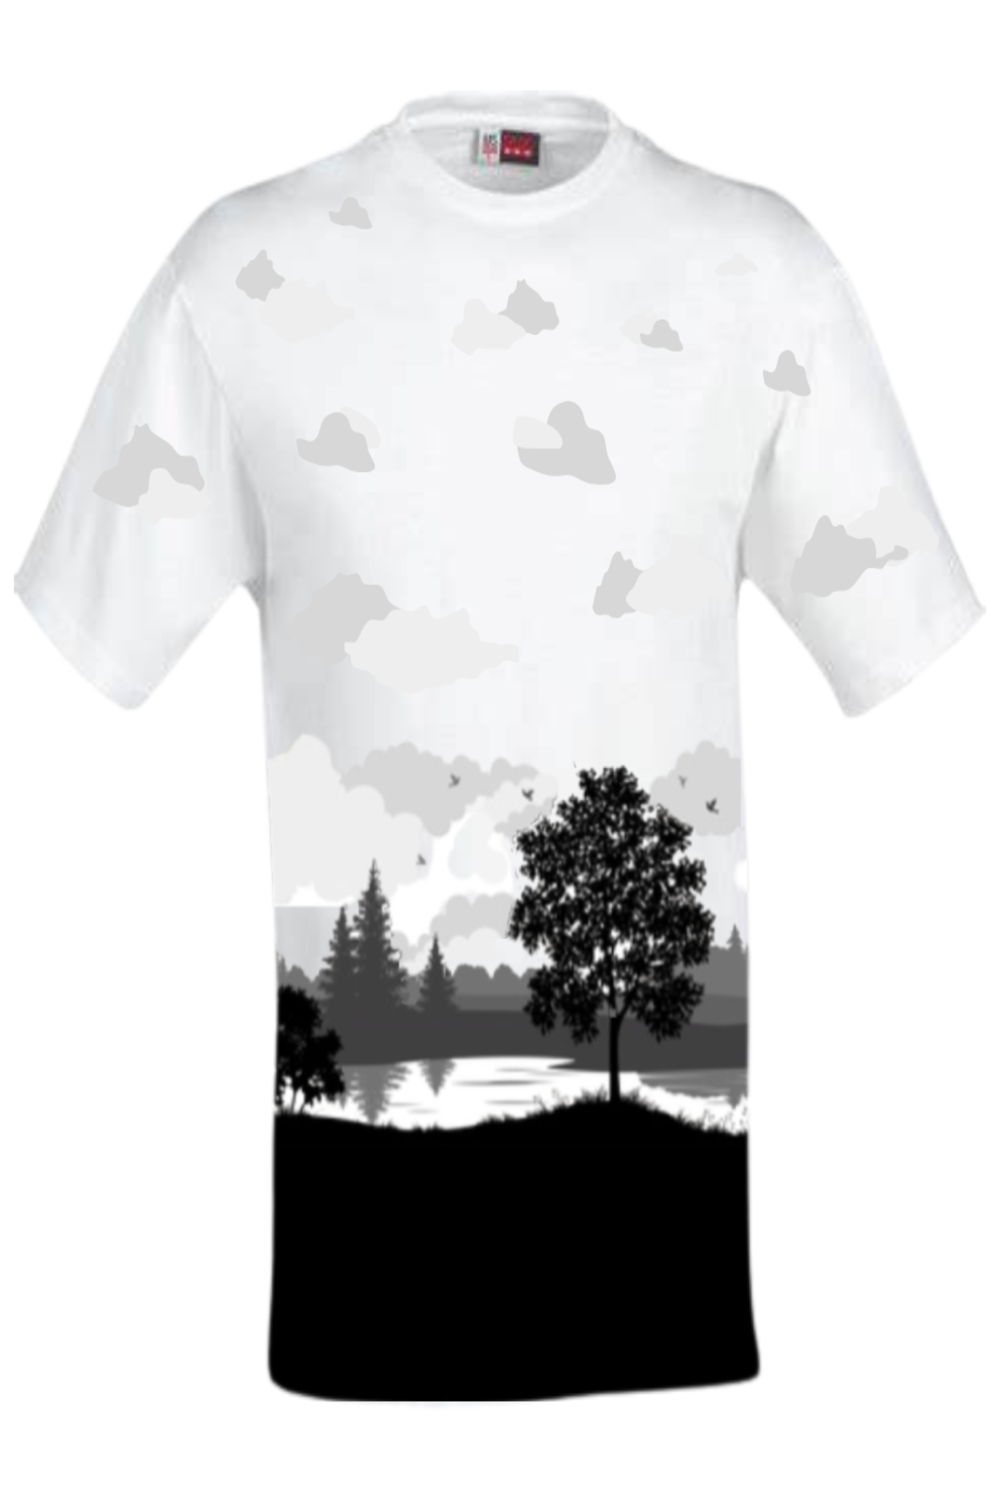 Nature Trees T-shirt Design pinterest image.